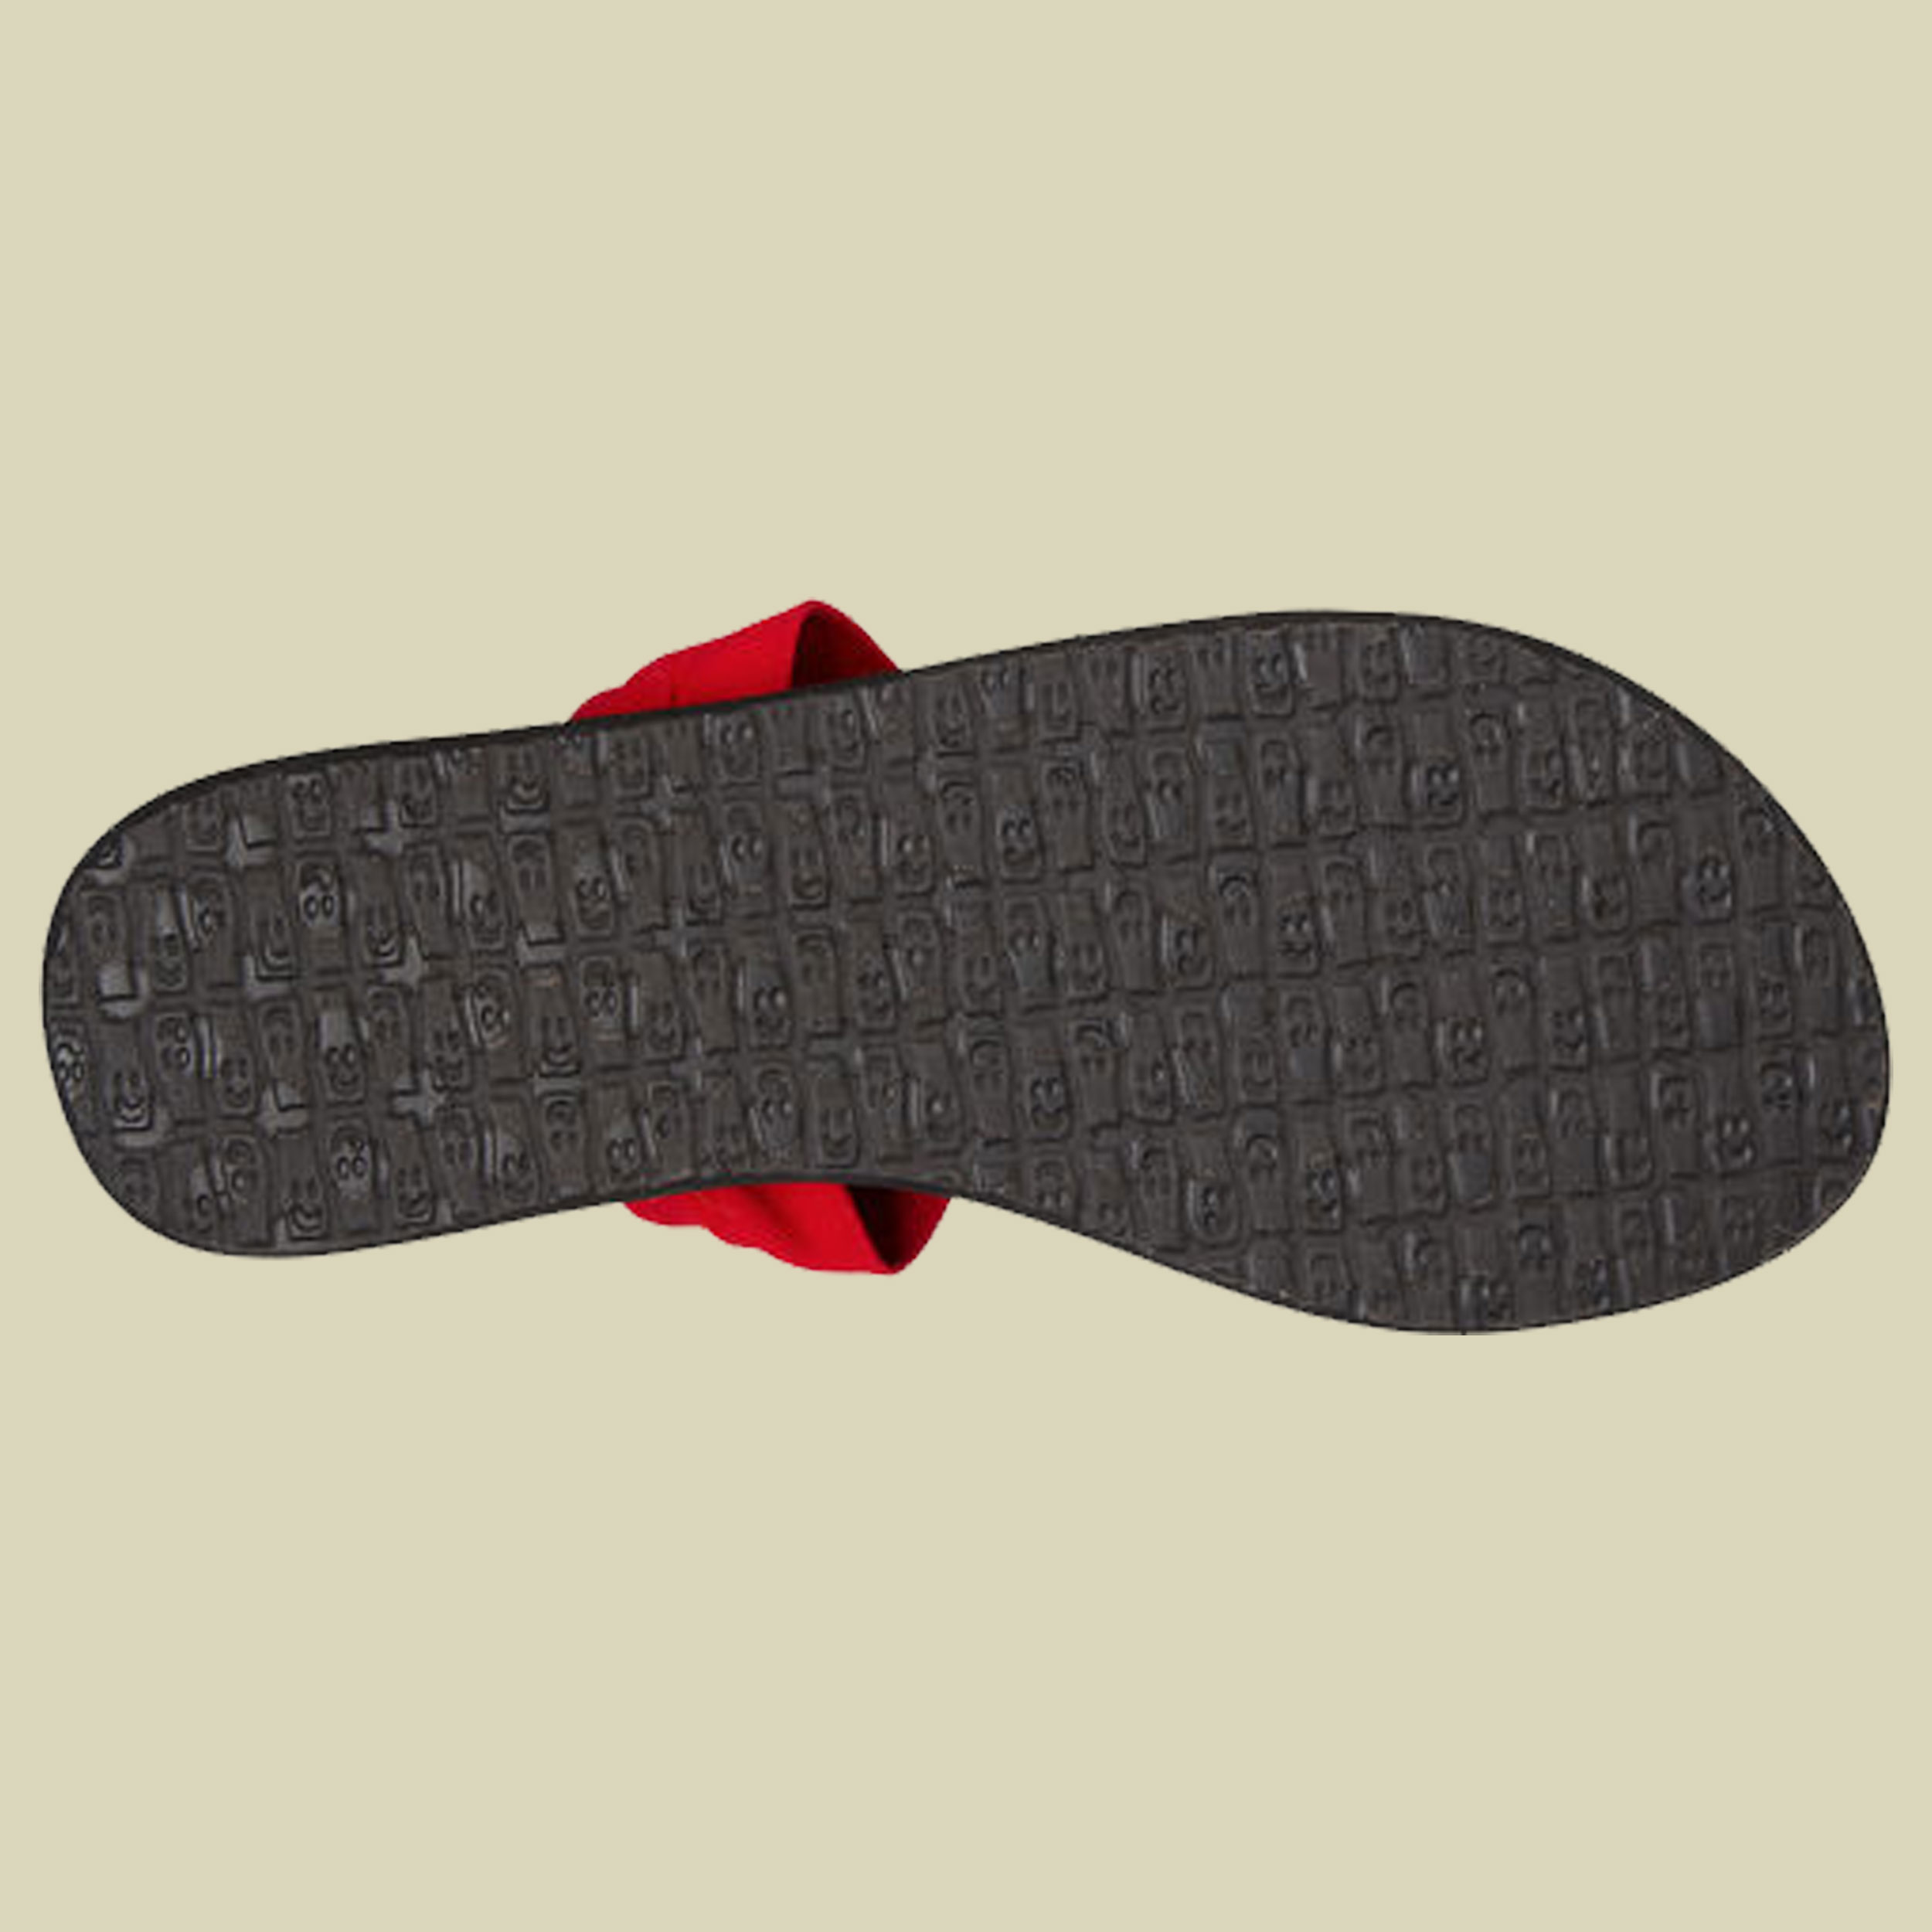 Yoga Sling 2 Sandals Women Größe UK 5 Farbe bright red